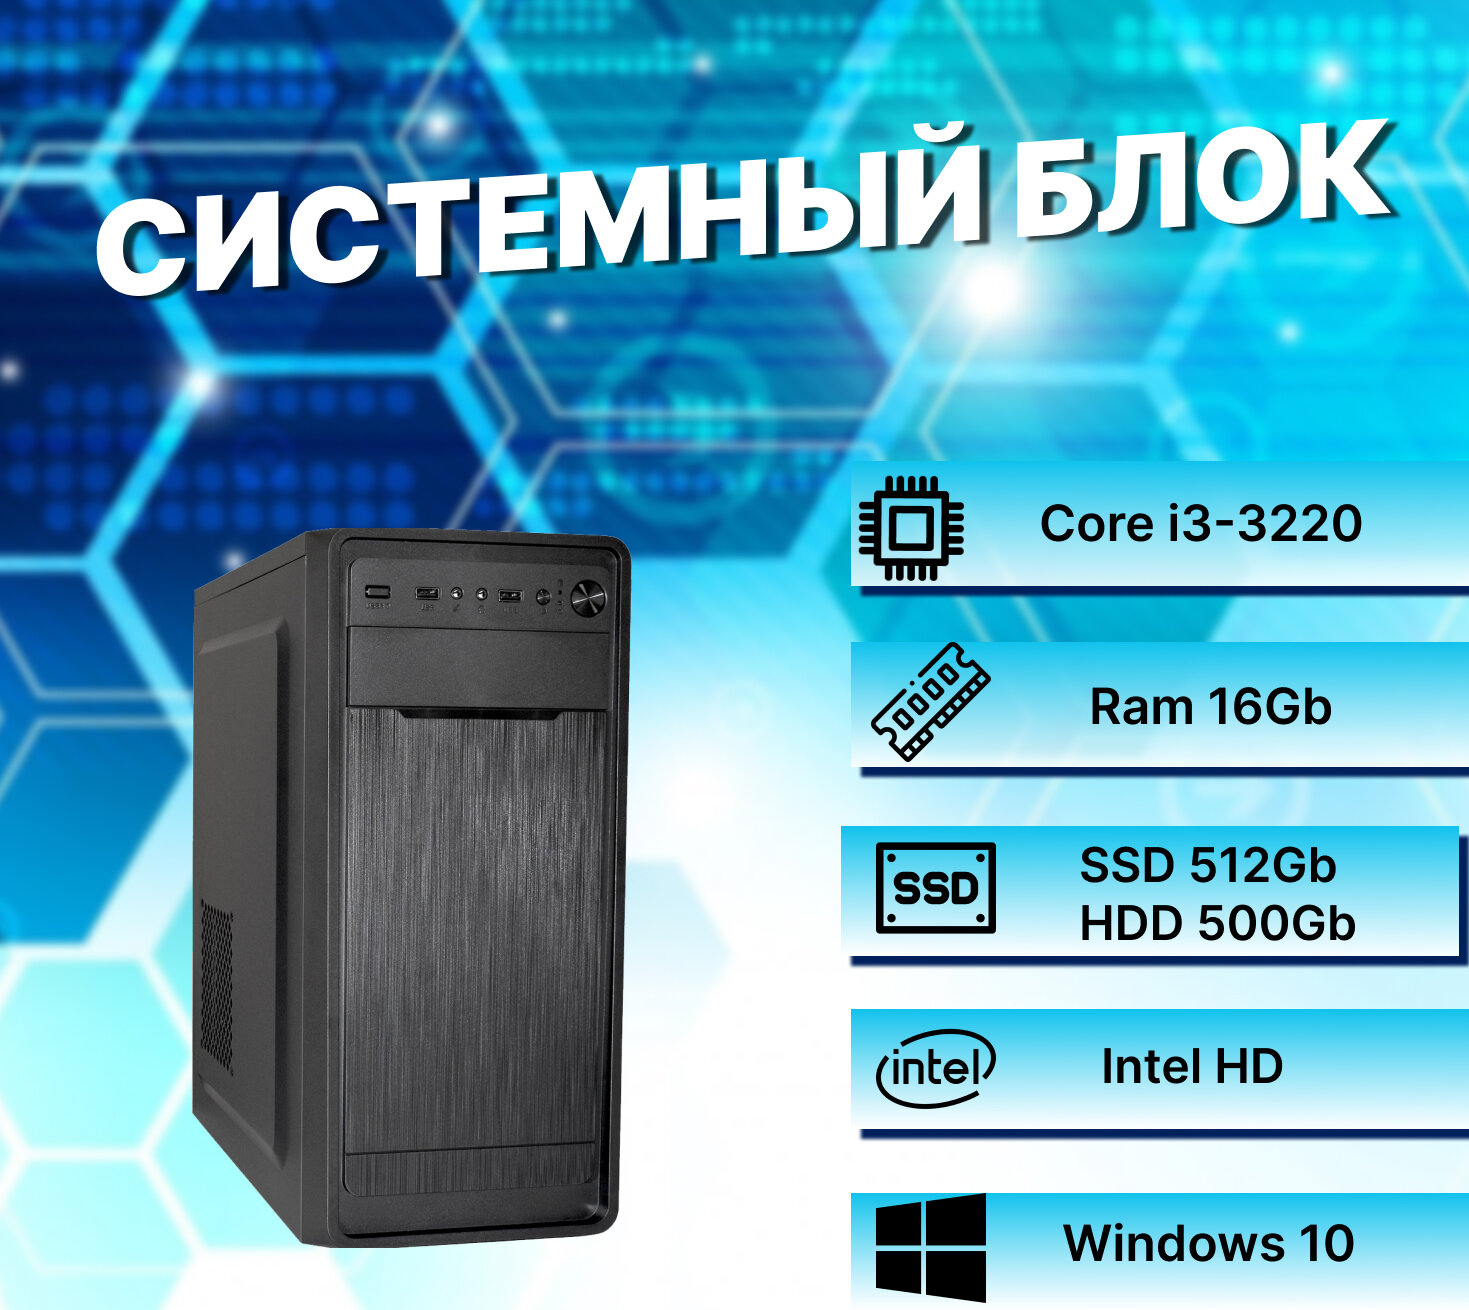 Системный блок Intel Core I3-3220 (3.4ГГц)/ RAM 16Gb/ SSD 512Gb/ HDD 500Gb/ Intel HD/ Windows 10 Pro